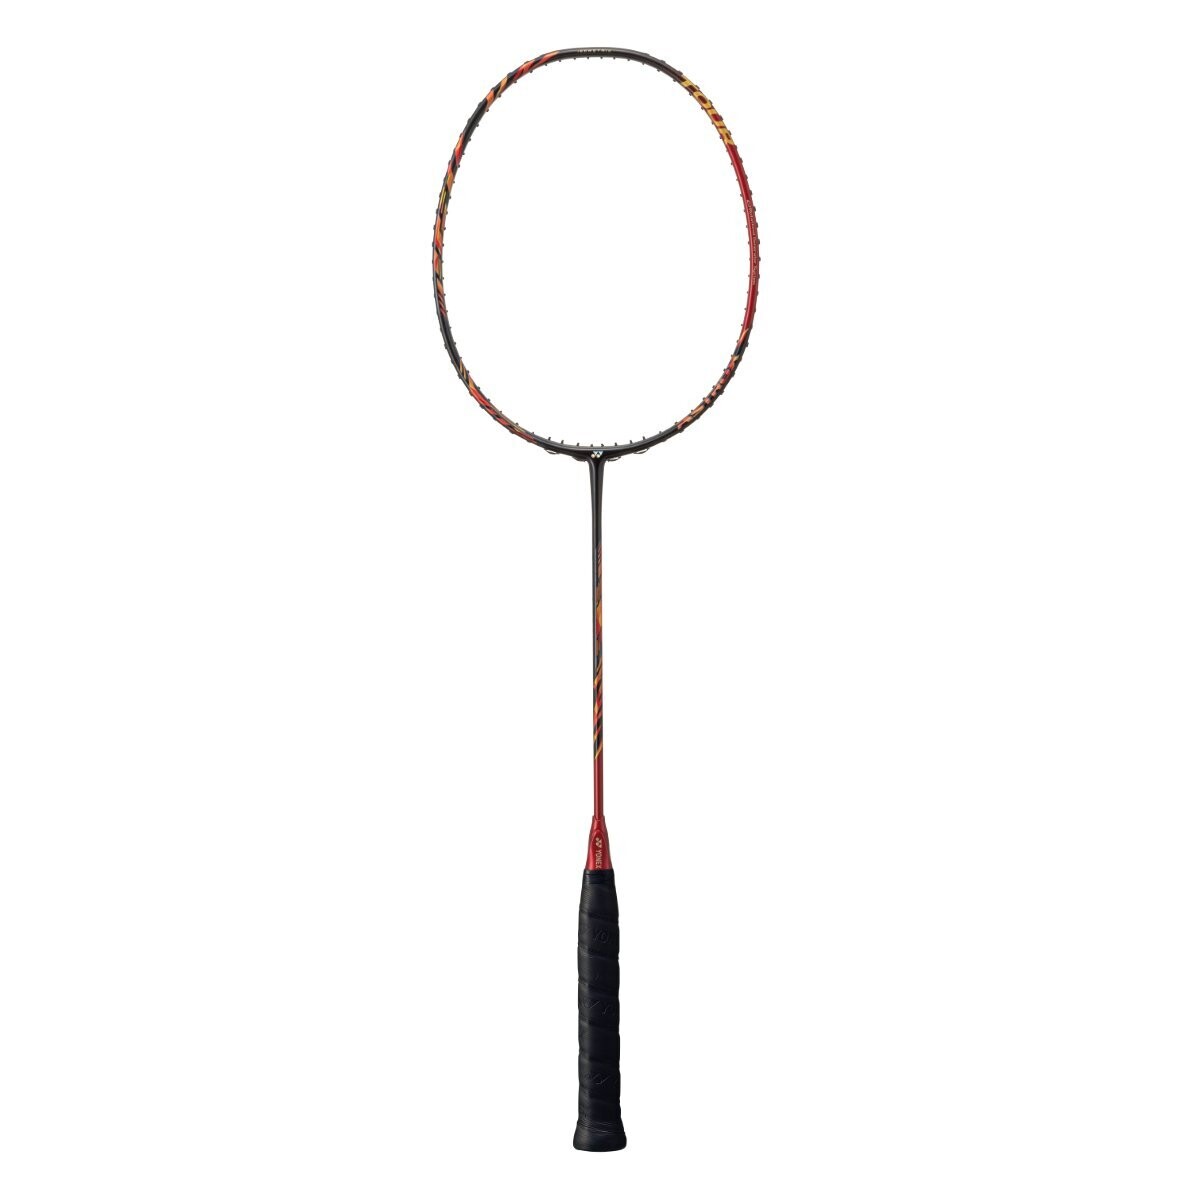 Yonex ASTROX 99 PLAY Badminton Schläger